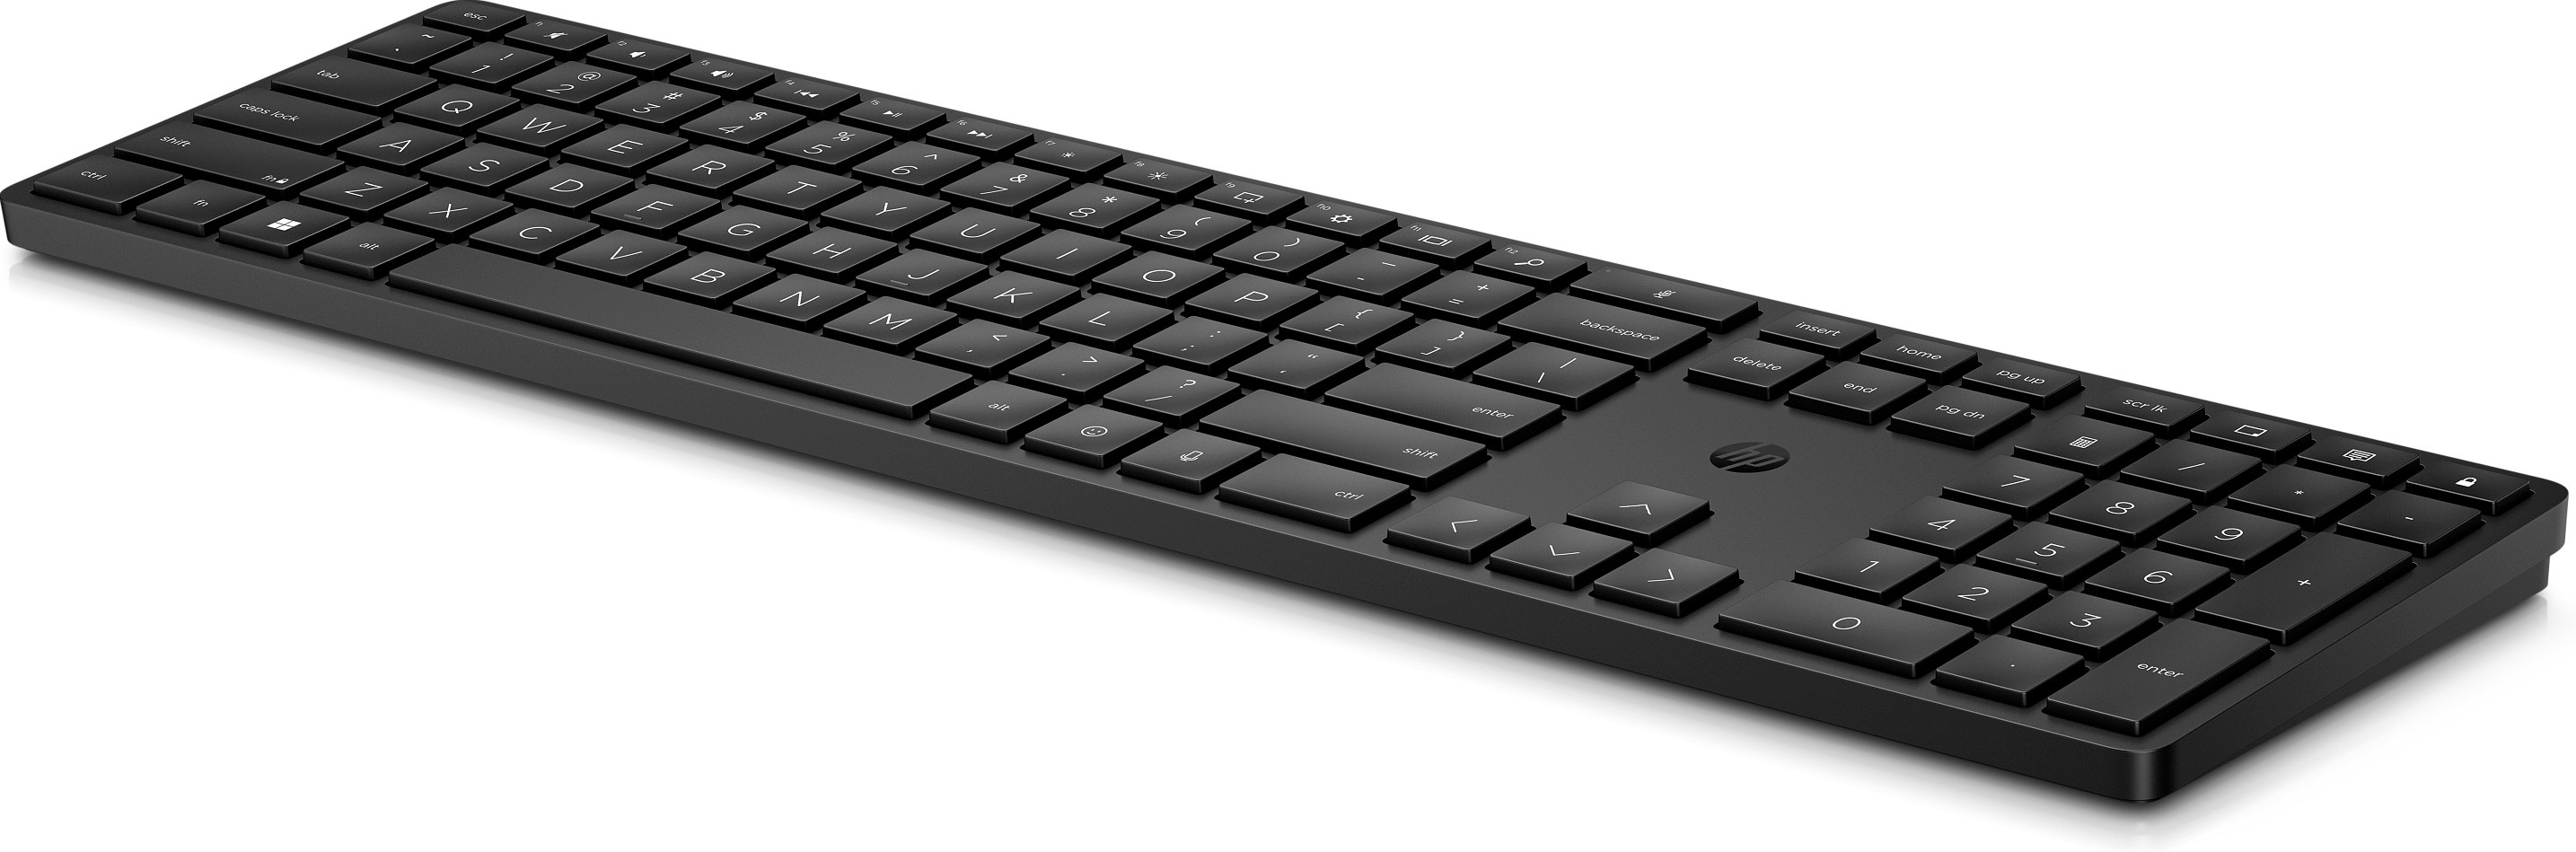 HP programmeerbaar draadloos toetsenbord bij ICT-Store.nl